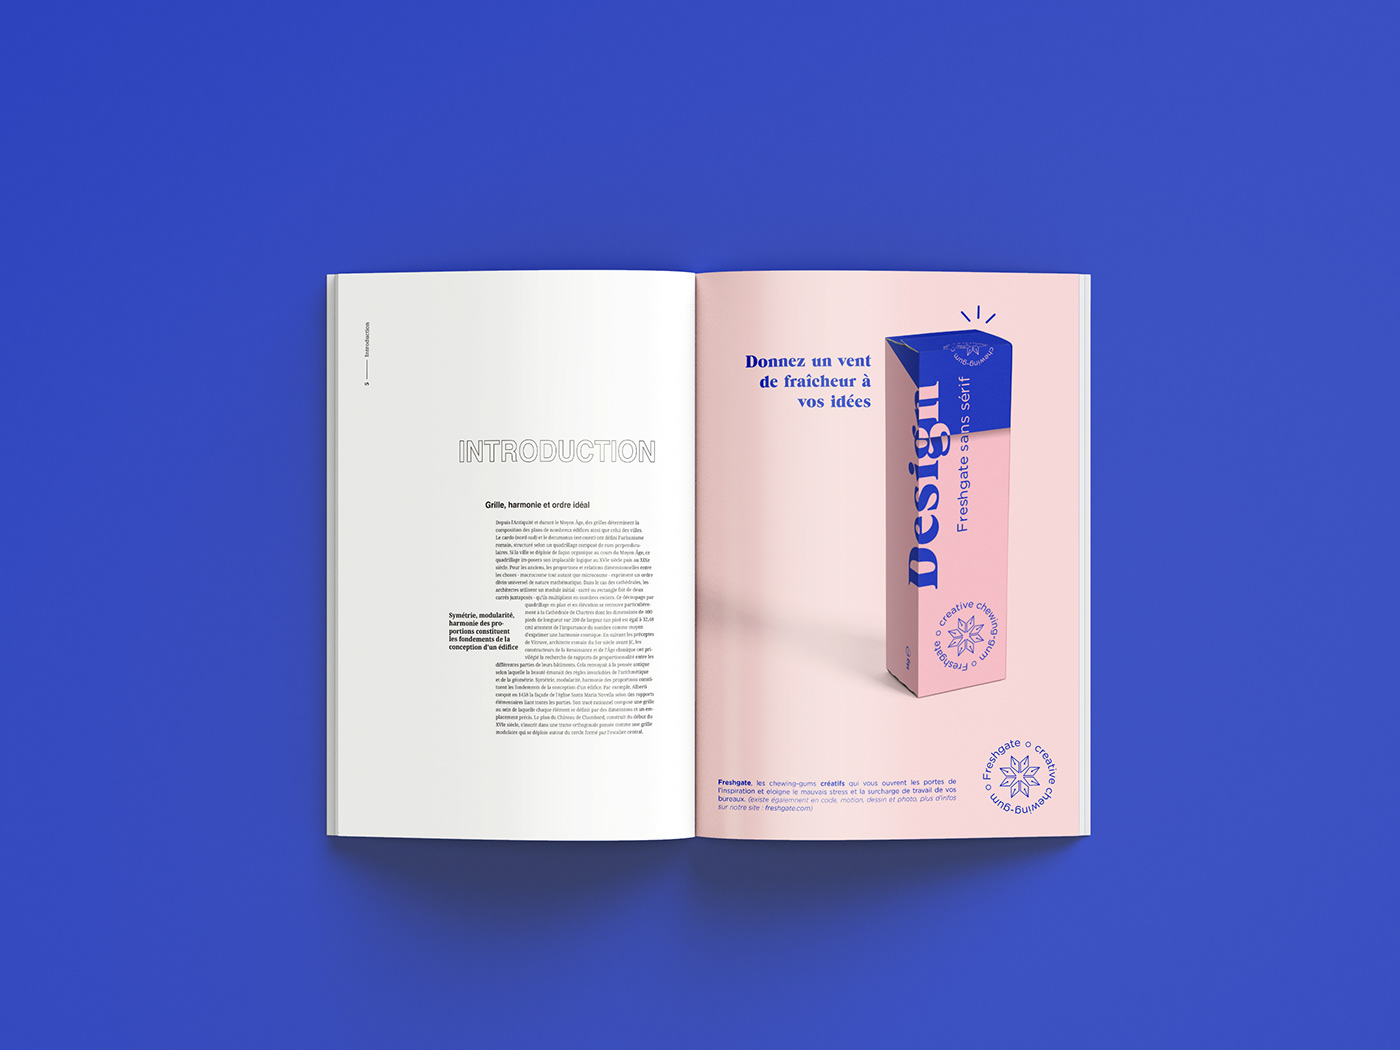 direction artistique chewing-gum creative Webdesign annonce-presse ad